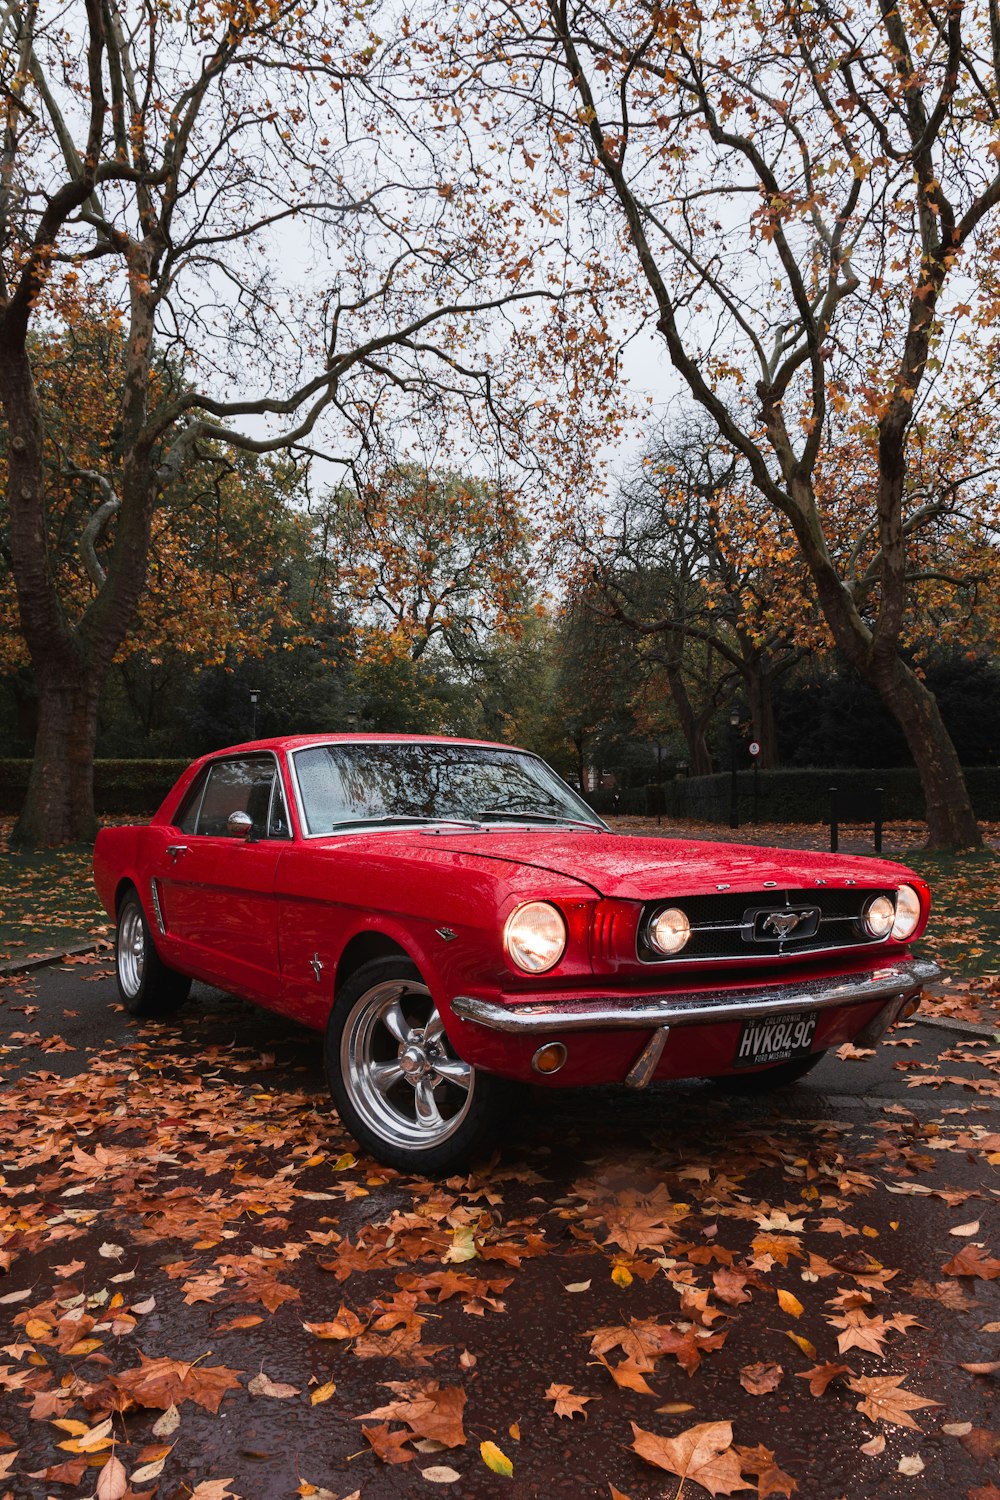 selektive Fokusfotografie eines geparkten roten Ford Mustang Coupés